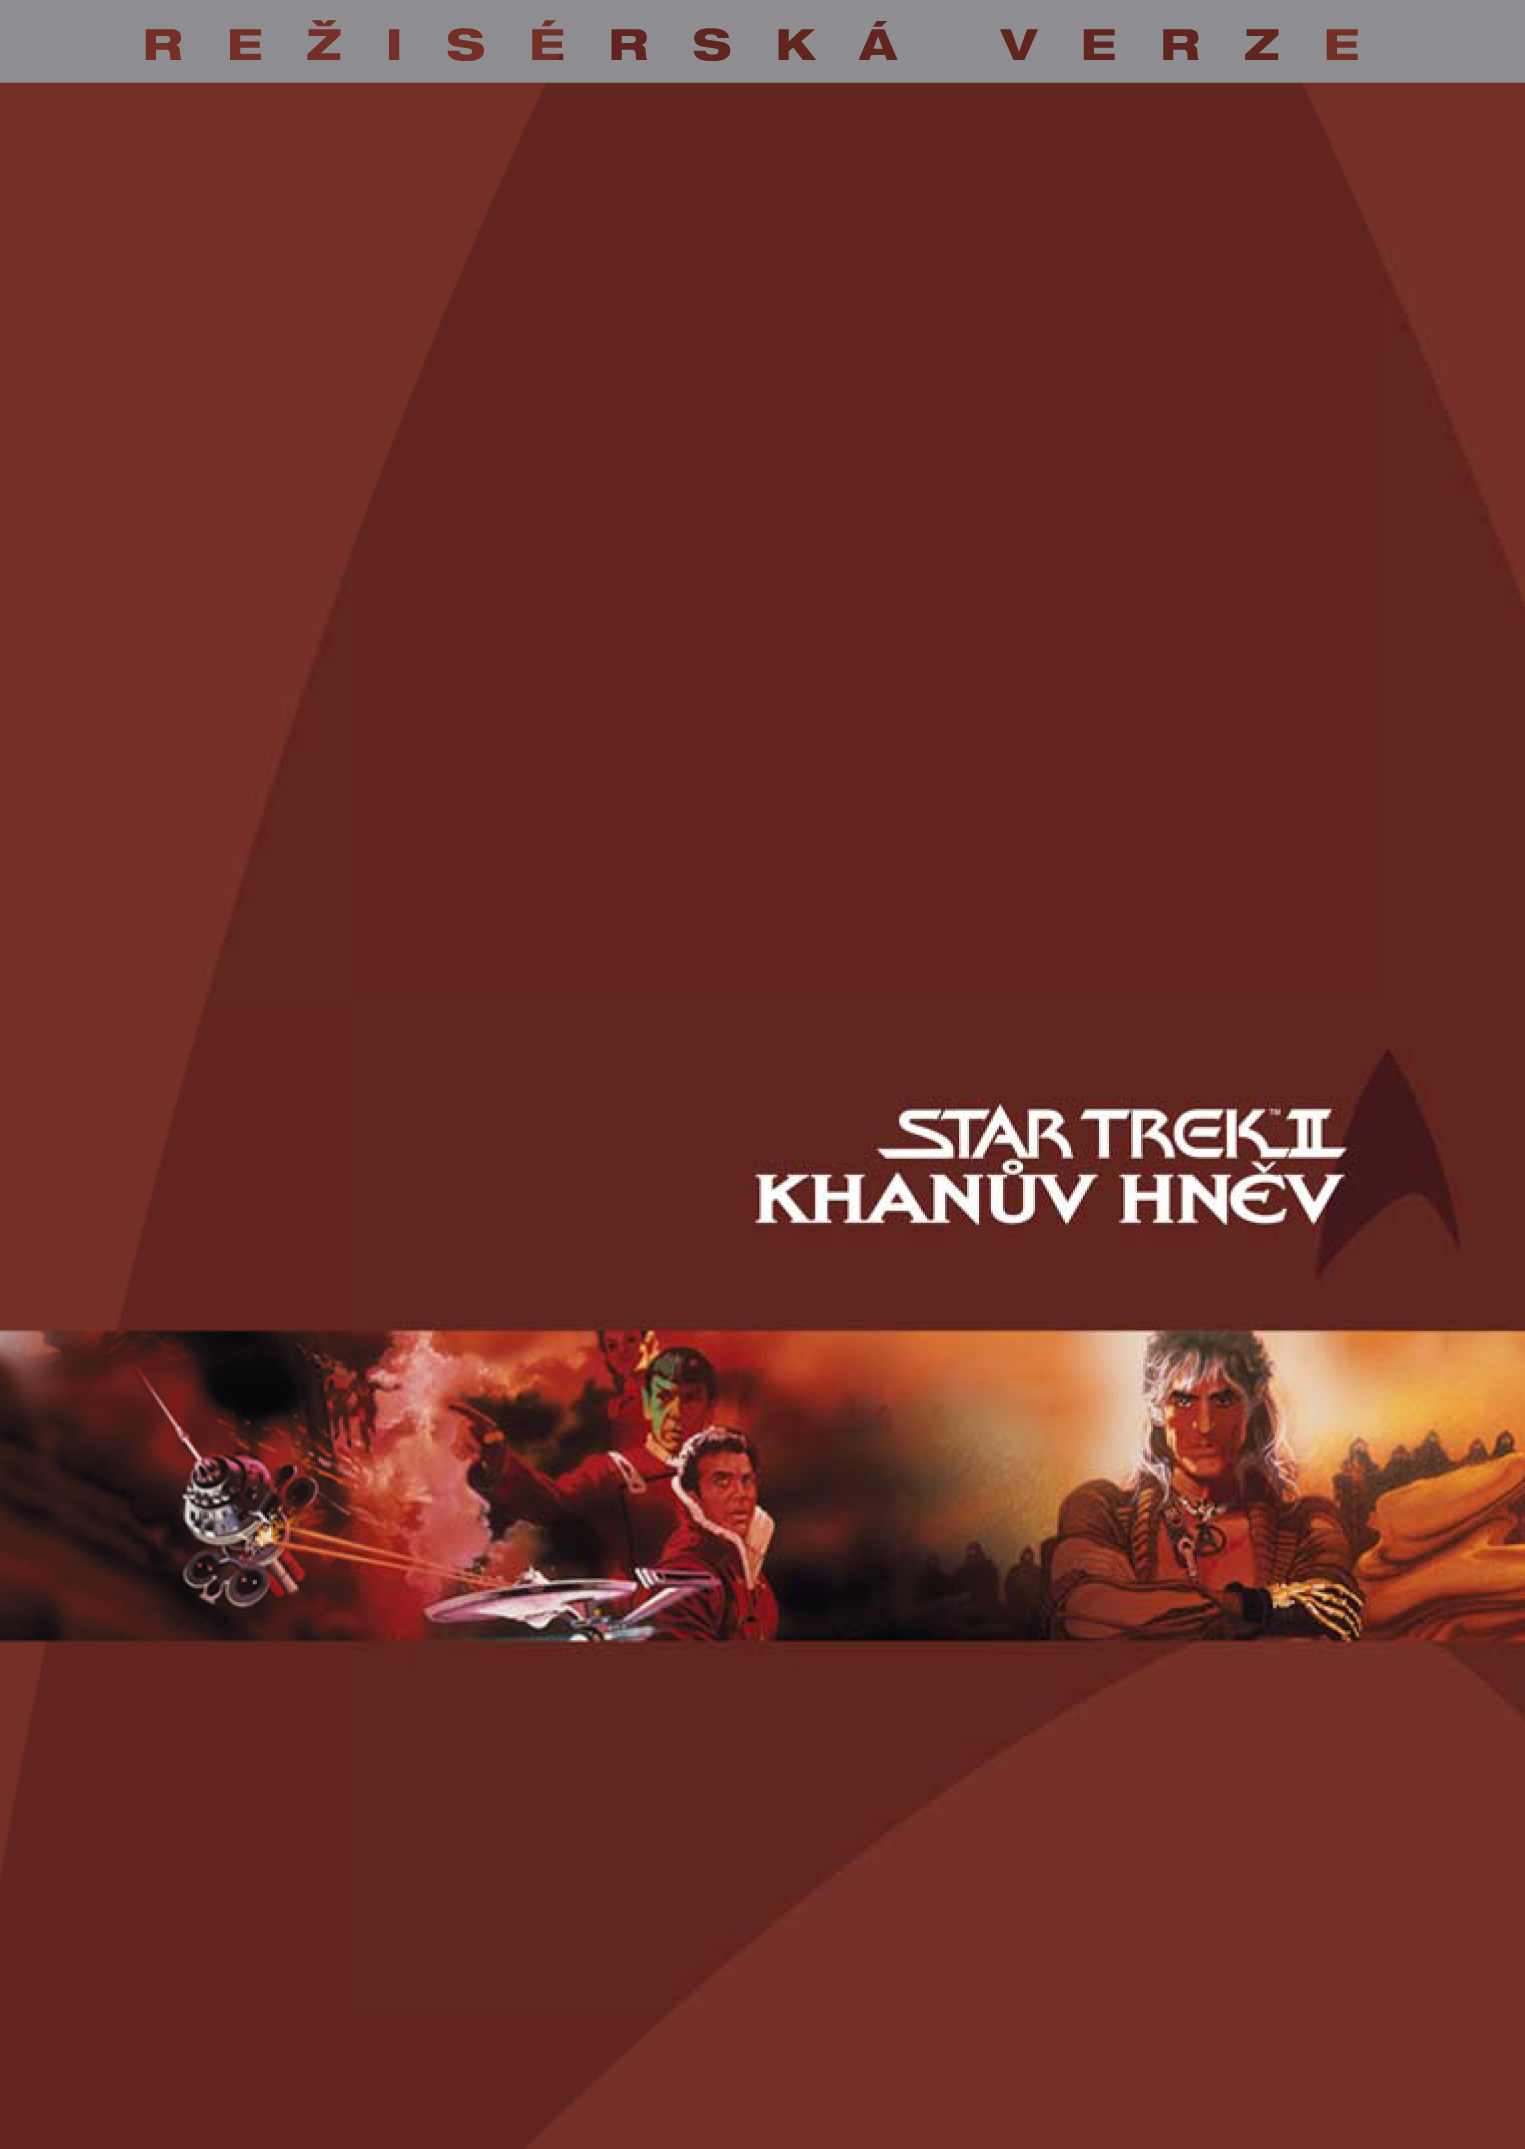 Film Star Trek II: Khanův hněv ke stažení - Film Star Trek II: Khanův hněv download